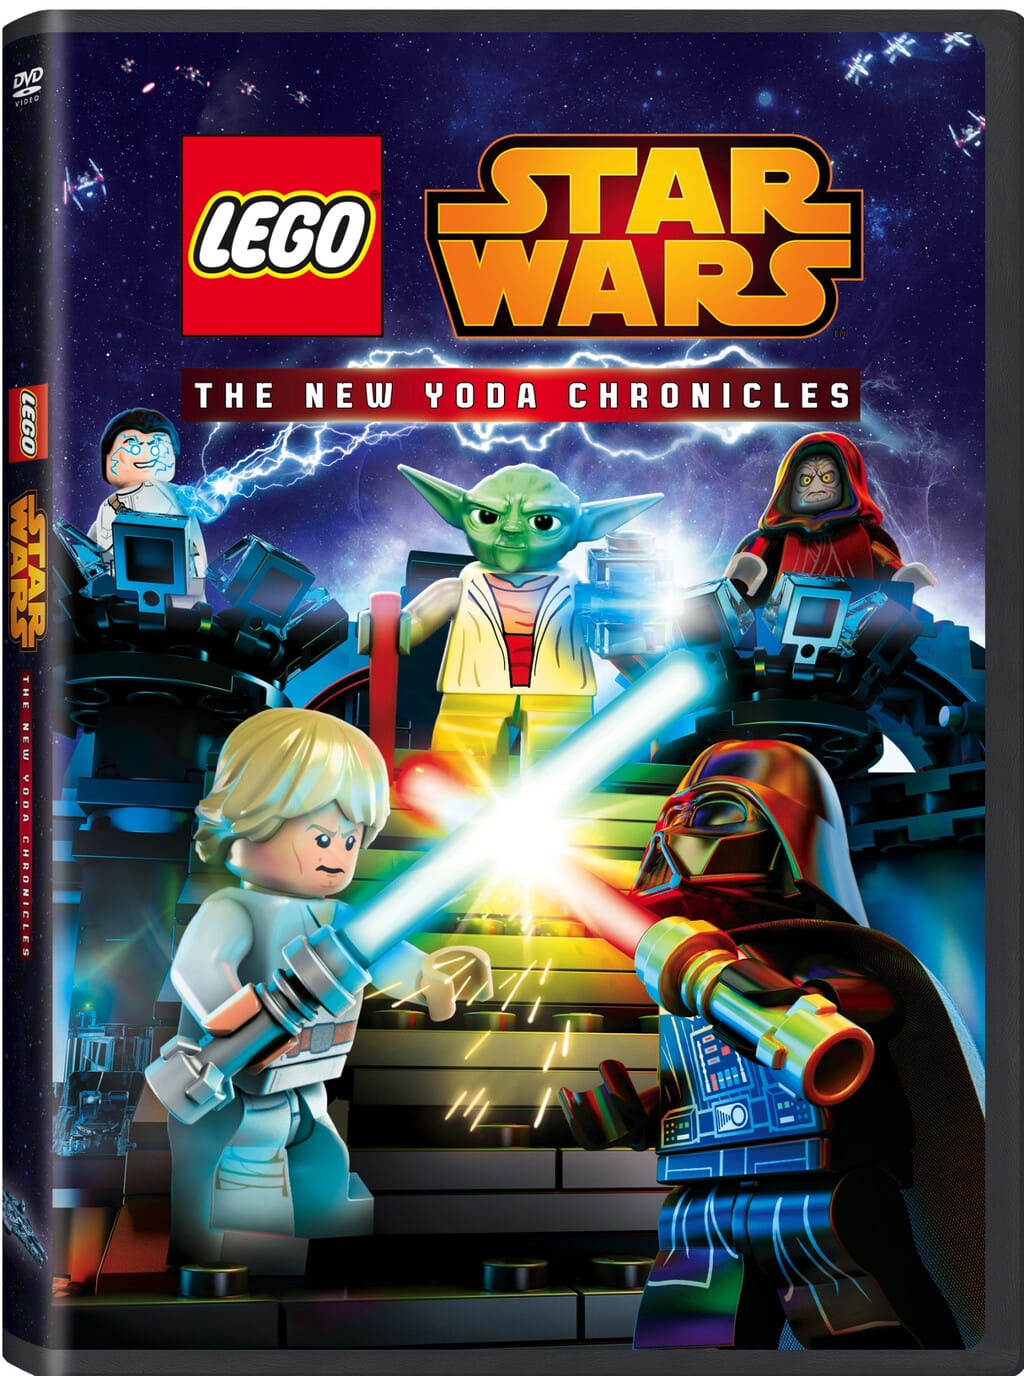 LEGO® STAR WARS: The New Yoda Chronicles on DVD 9/15